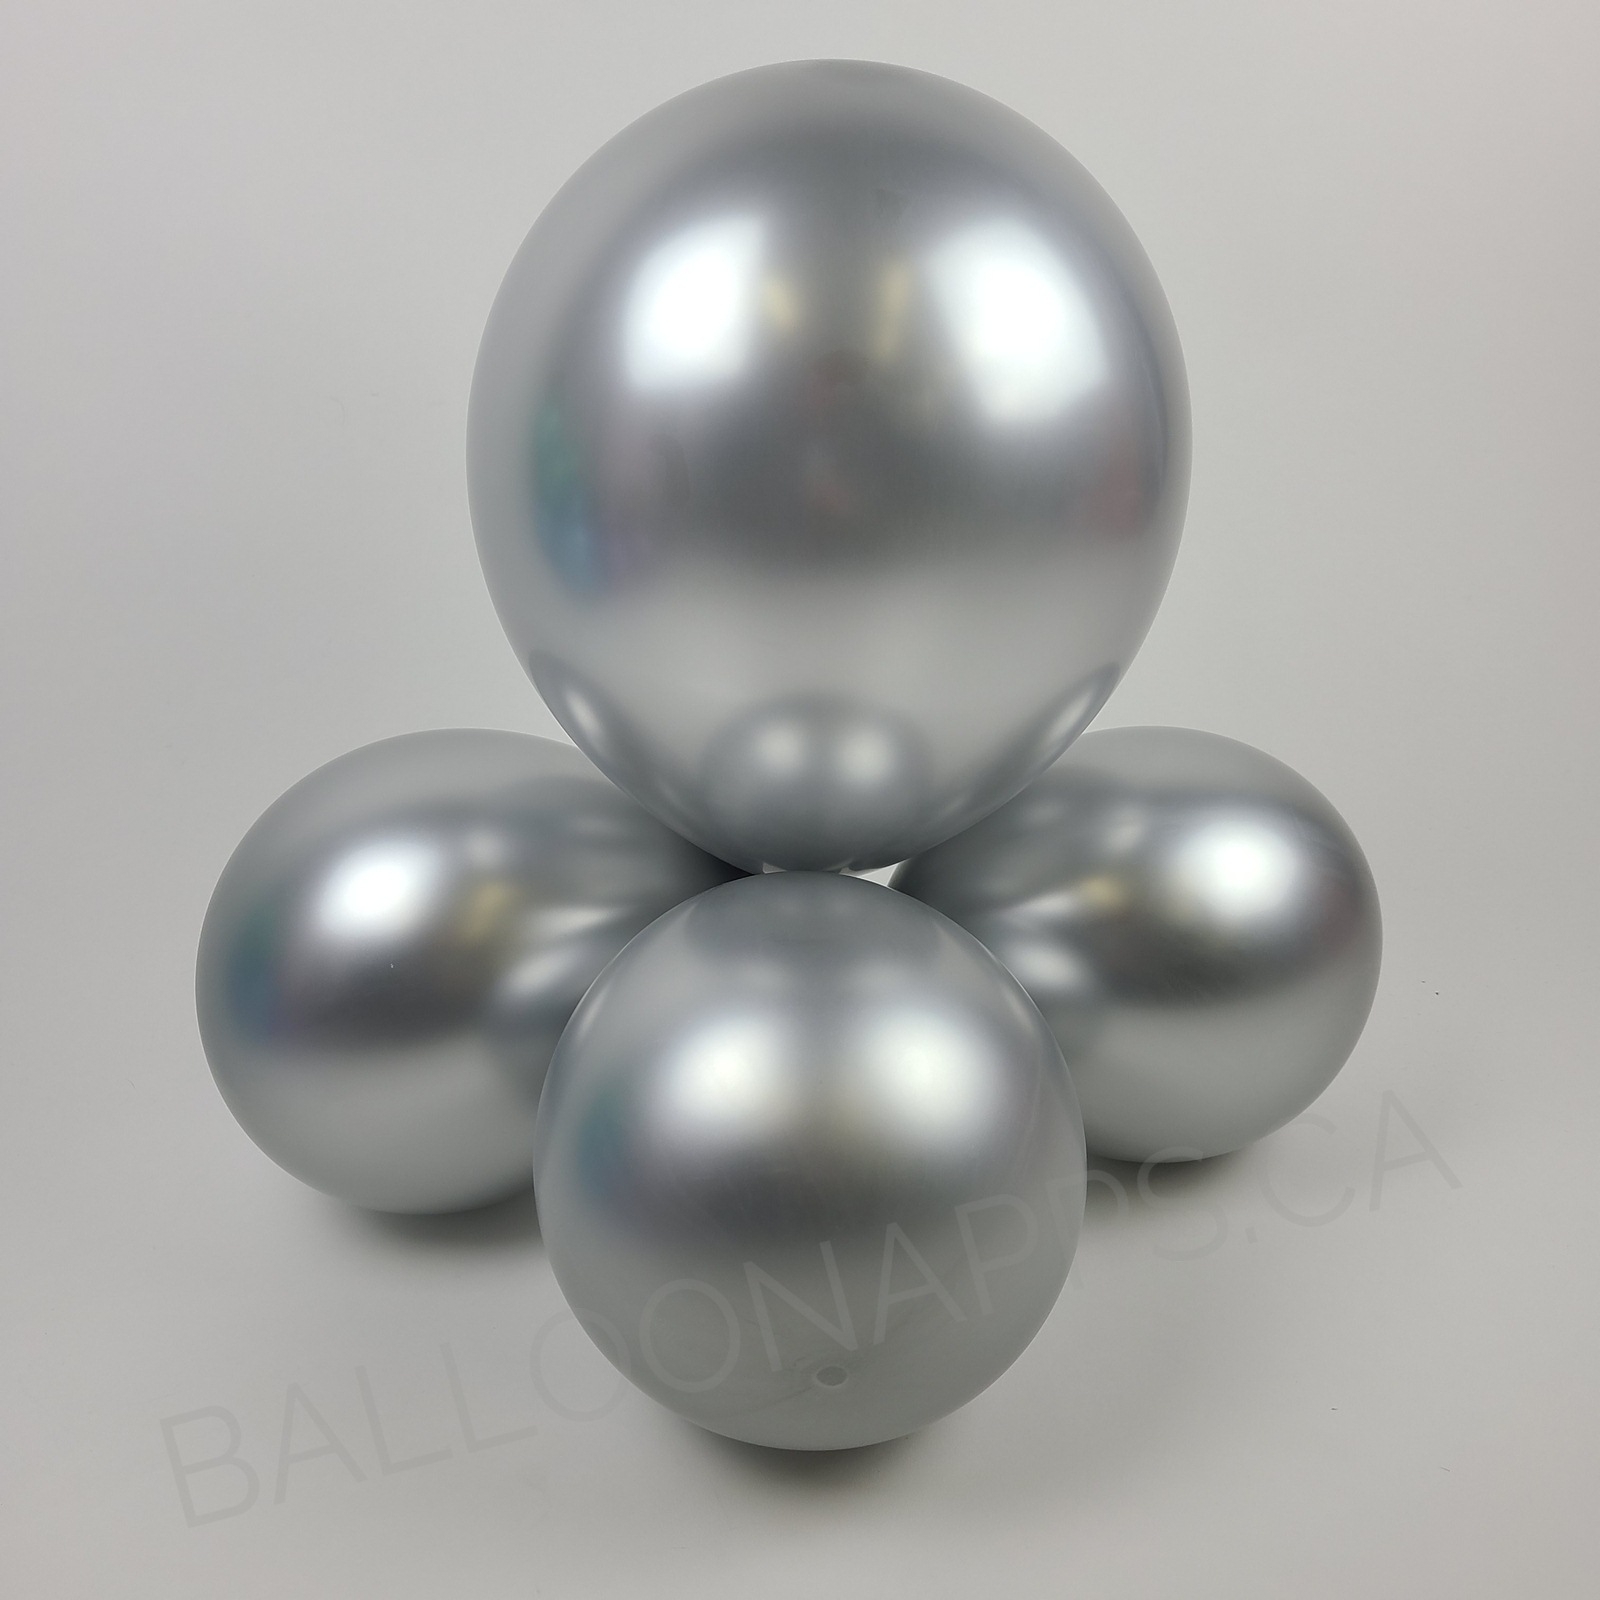 balloon texture SEM (50) 11